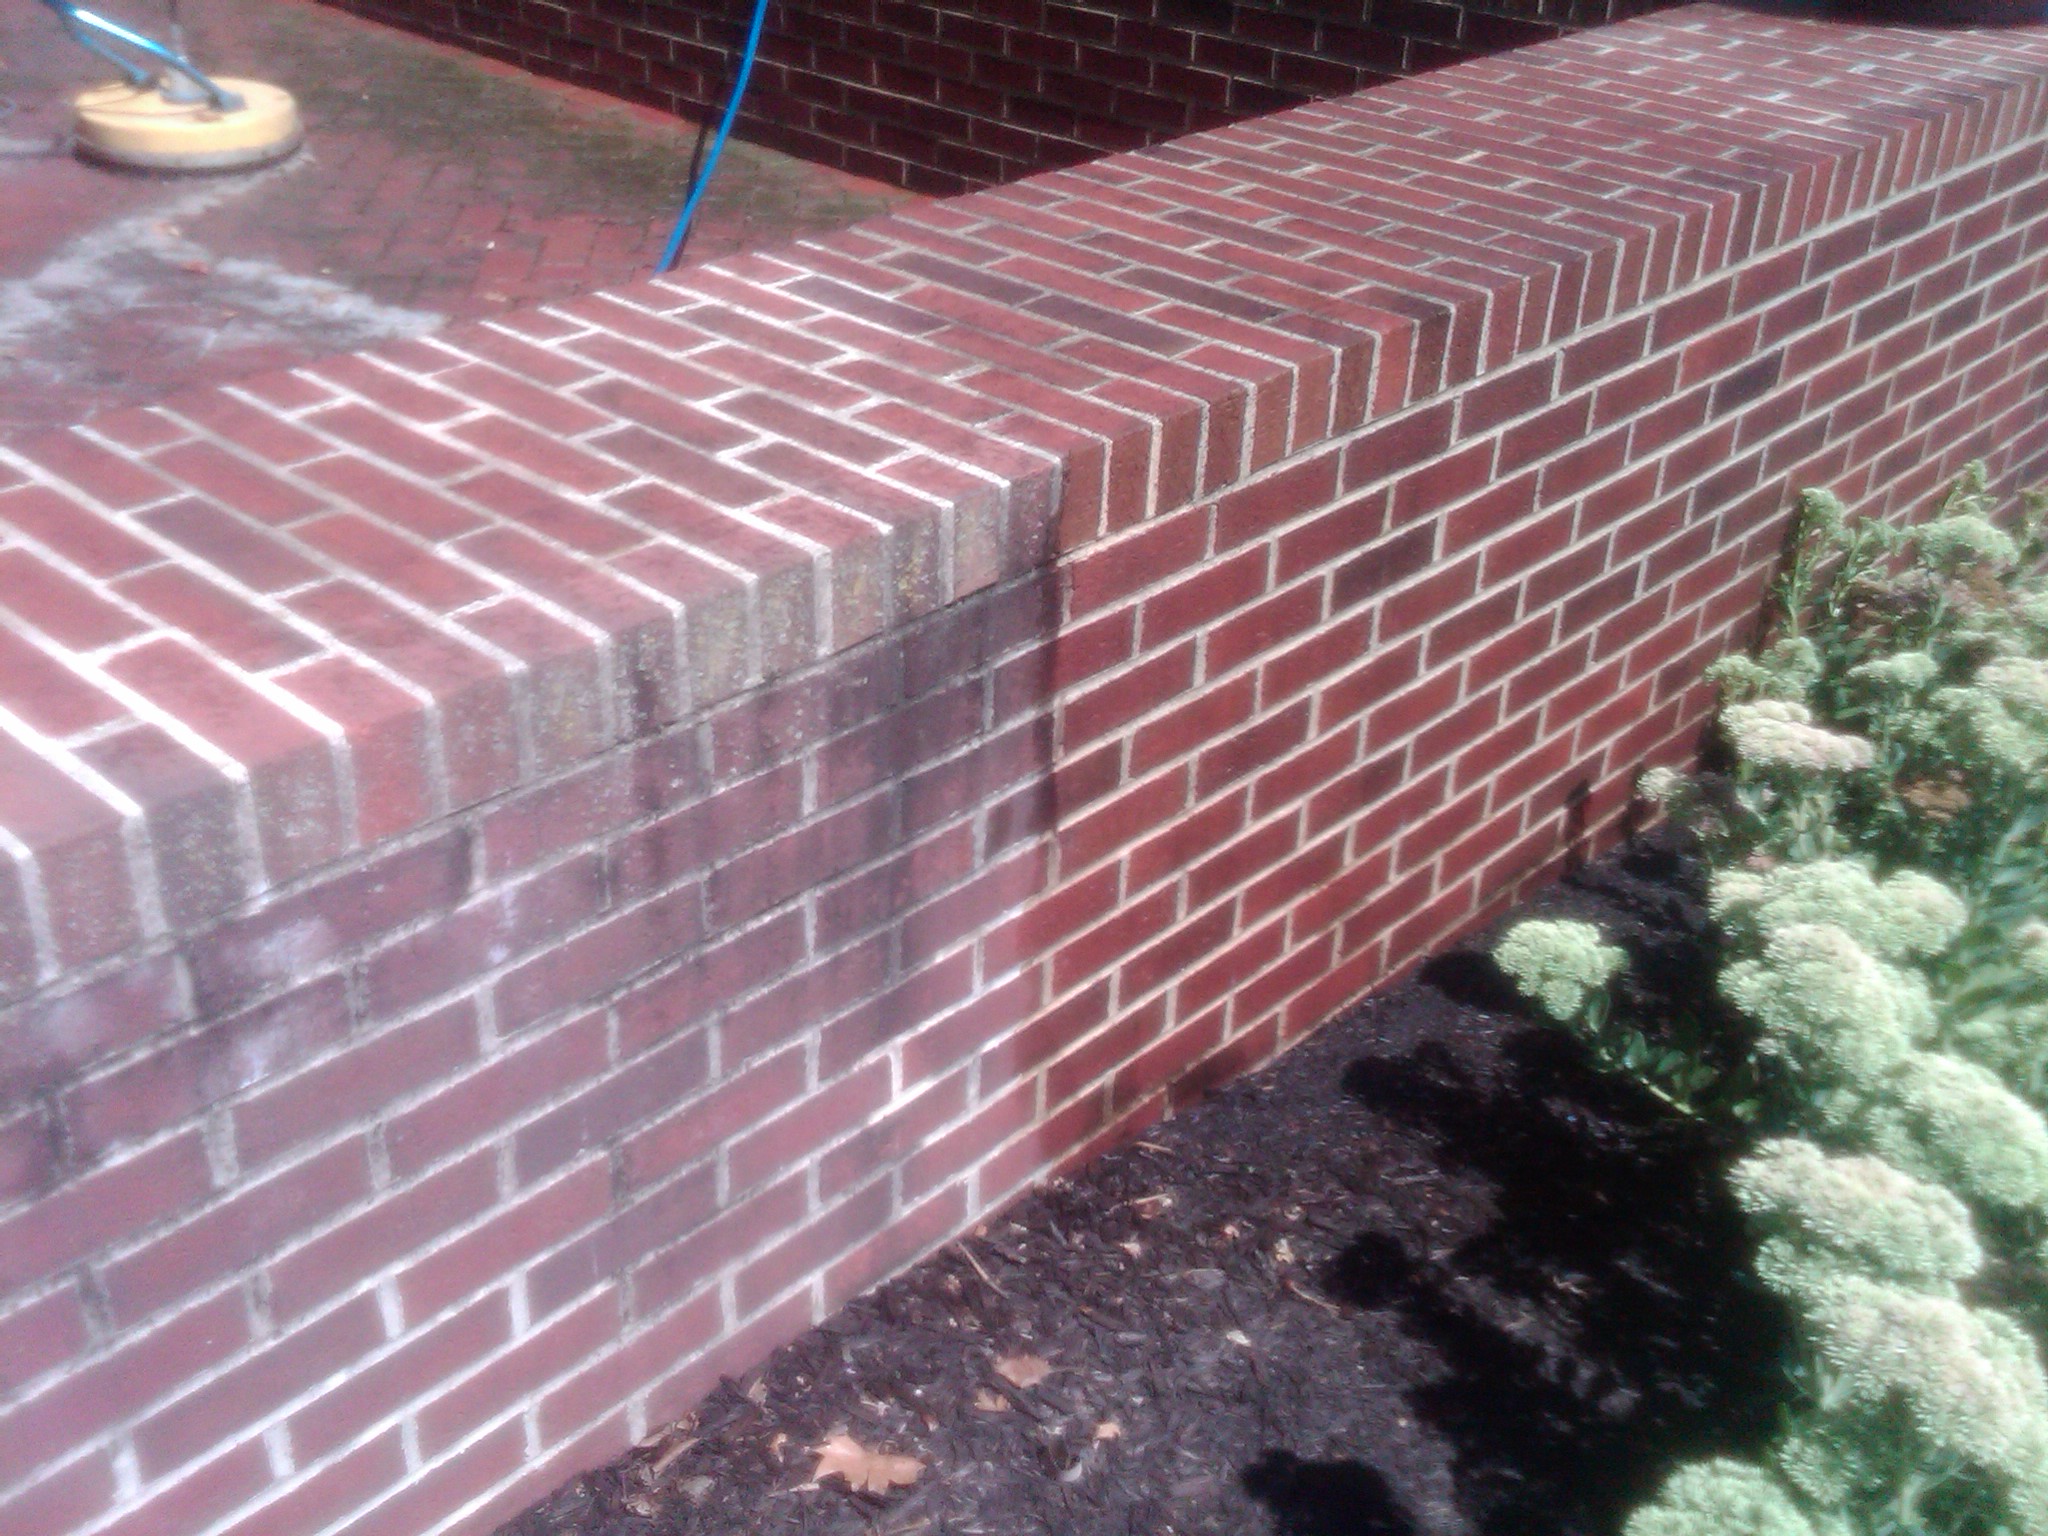 Pressure washing of brick wall to clean dirty green algae.